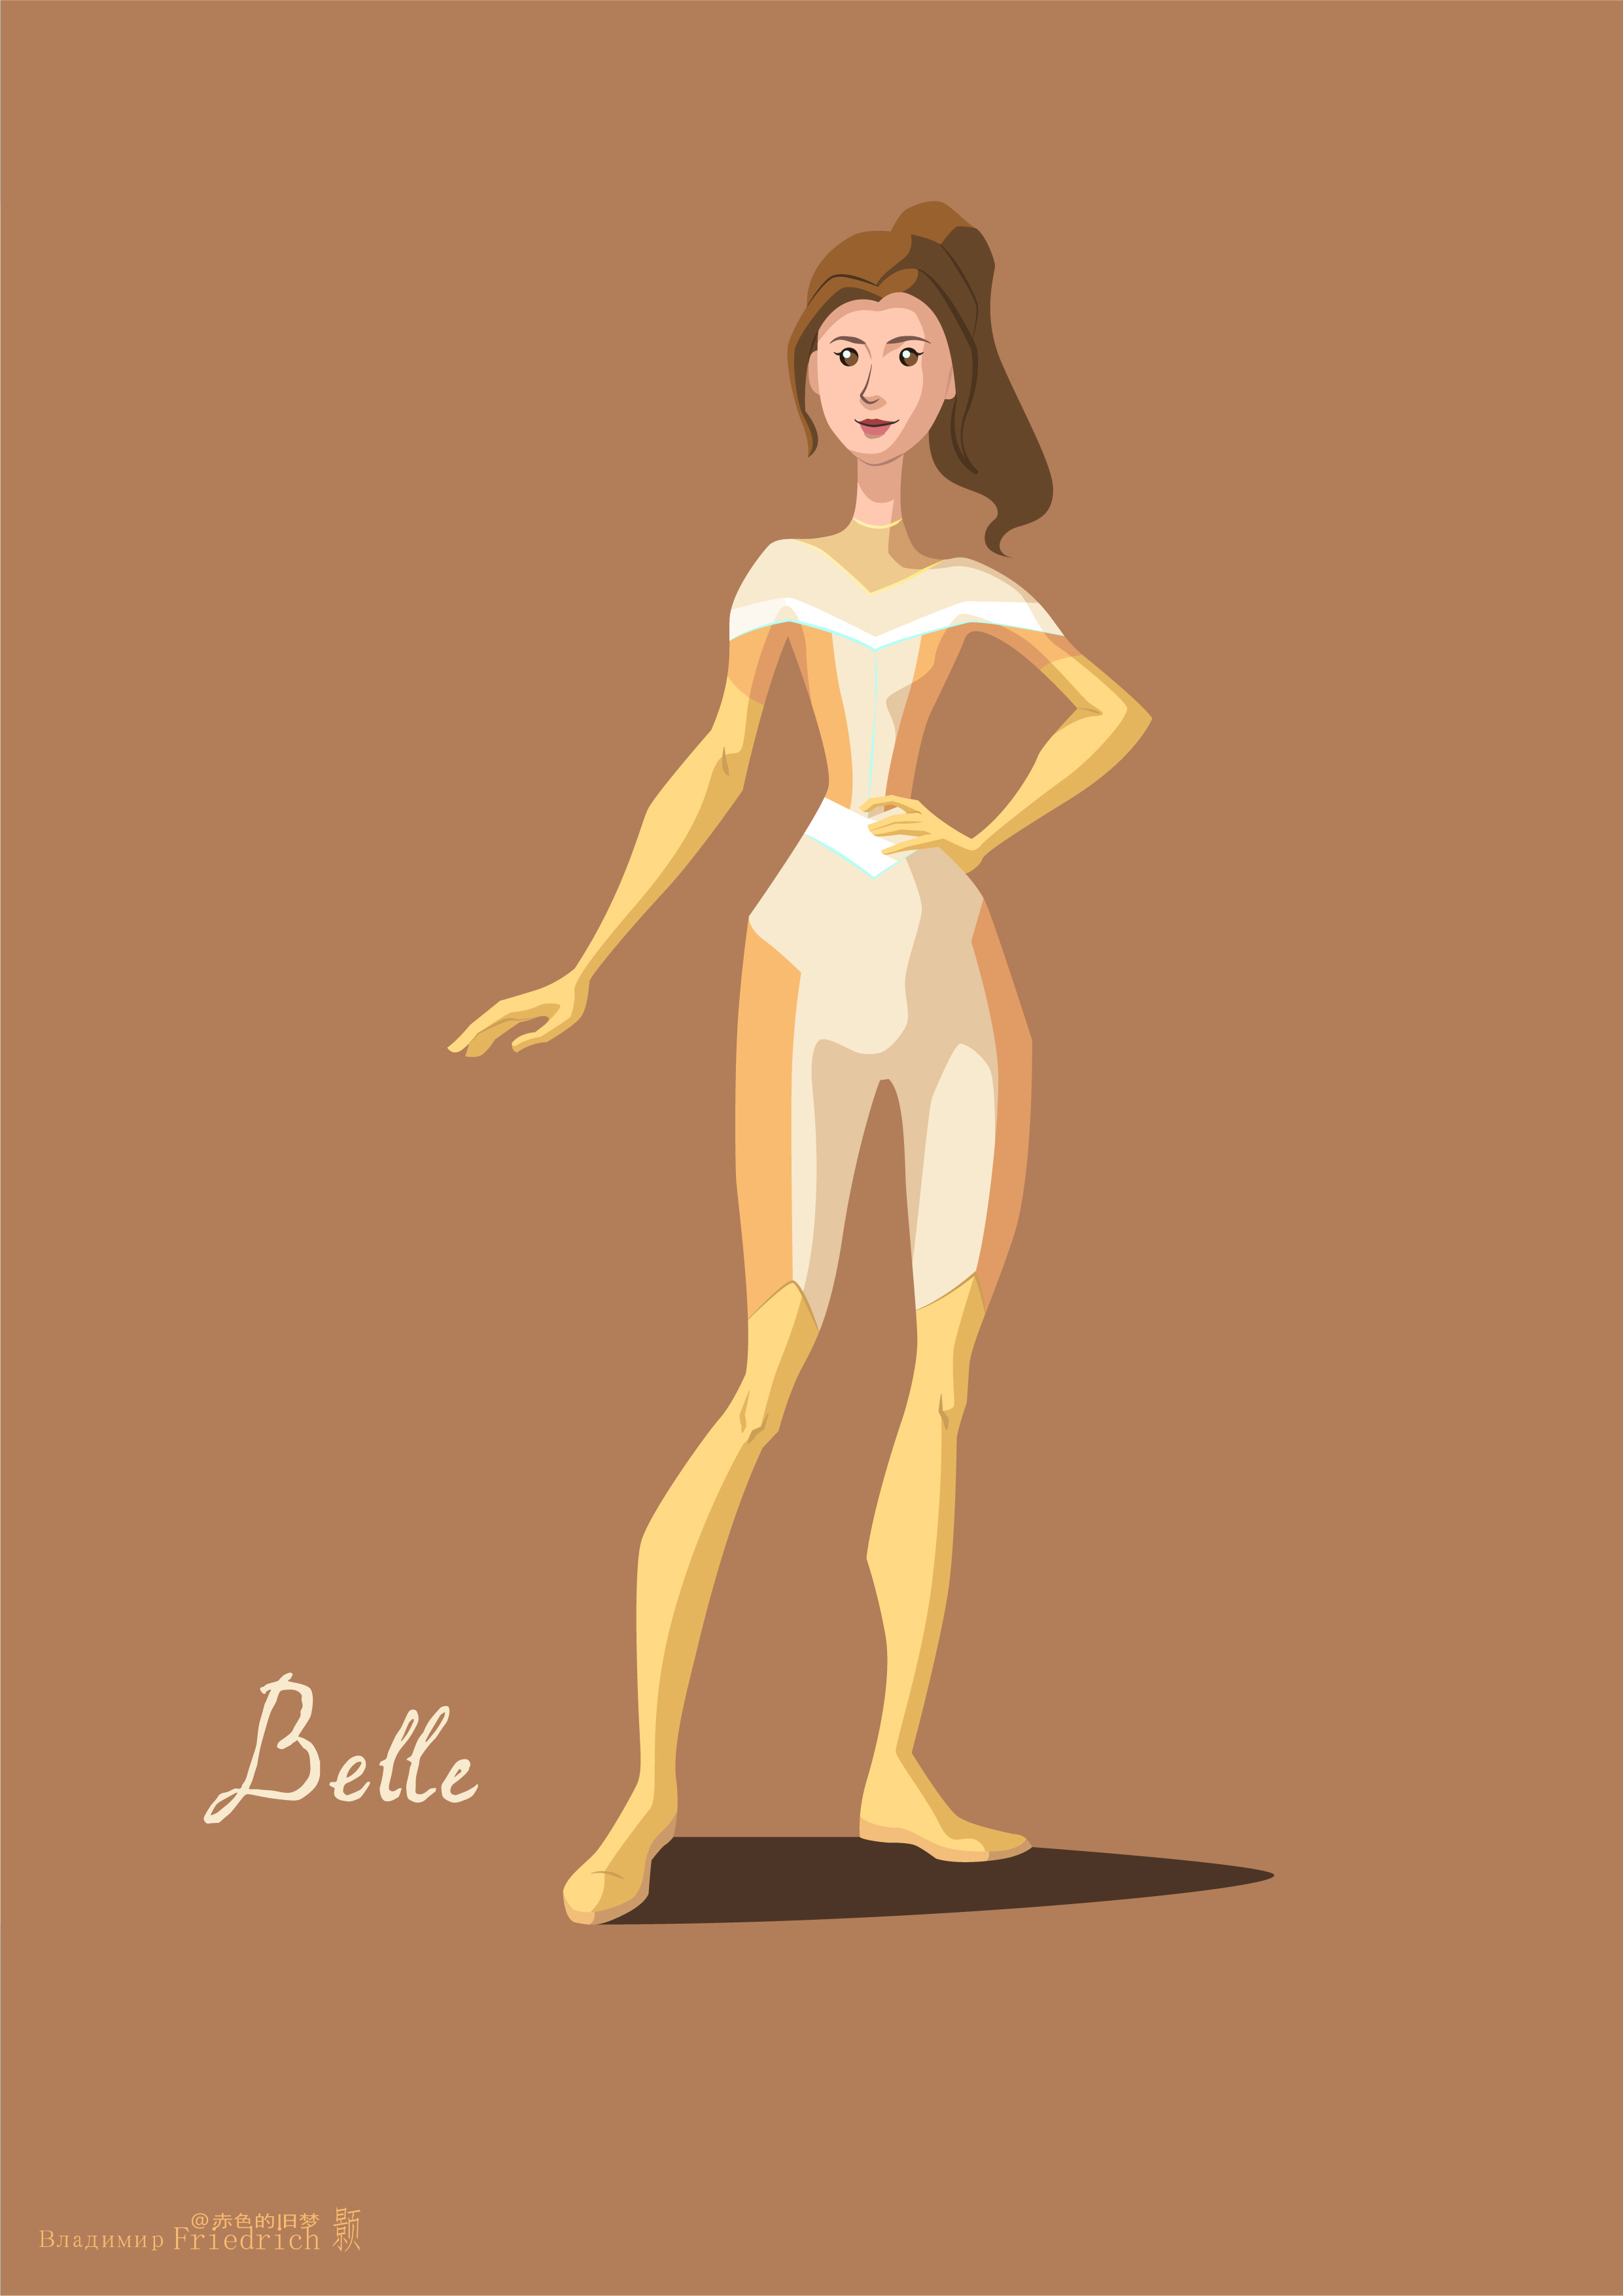 Illustration Flatdesign Disney Princesses Belle Beauty And The Beast Superheroines Superhero Simple  2481x3509